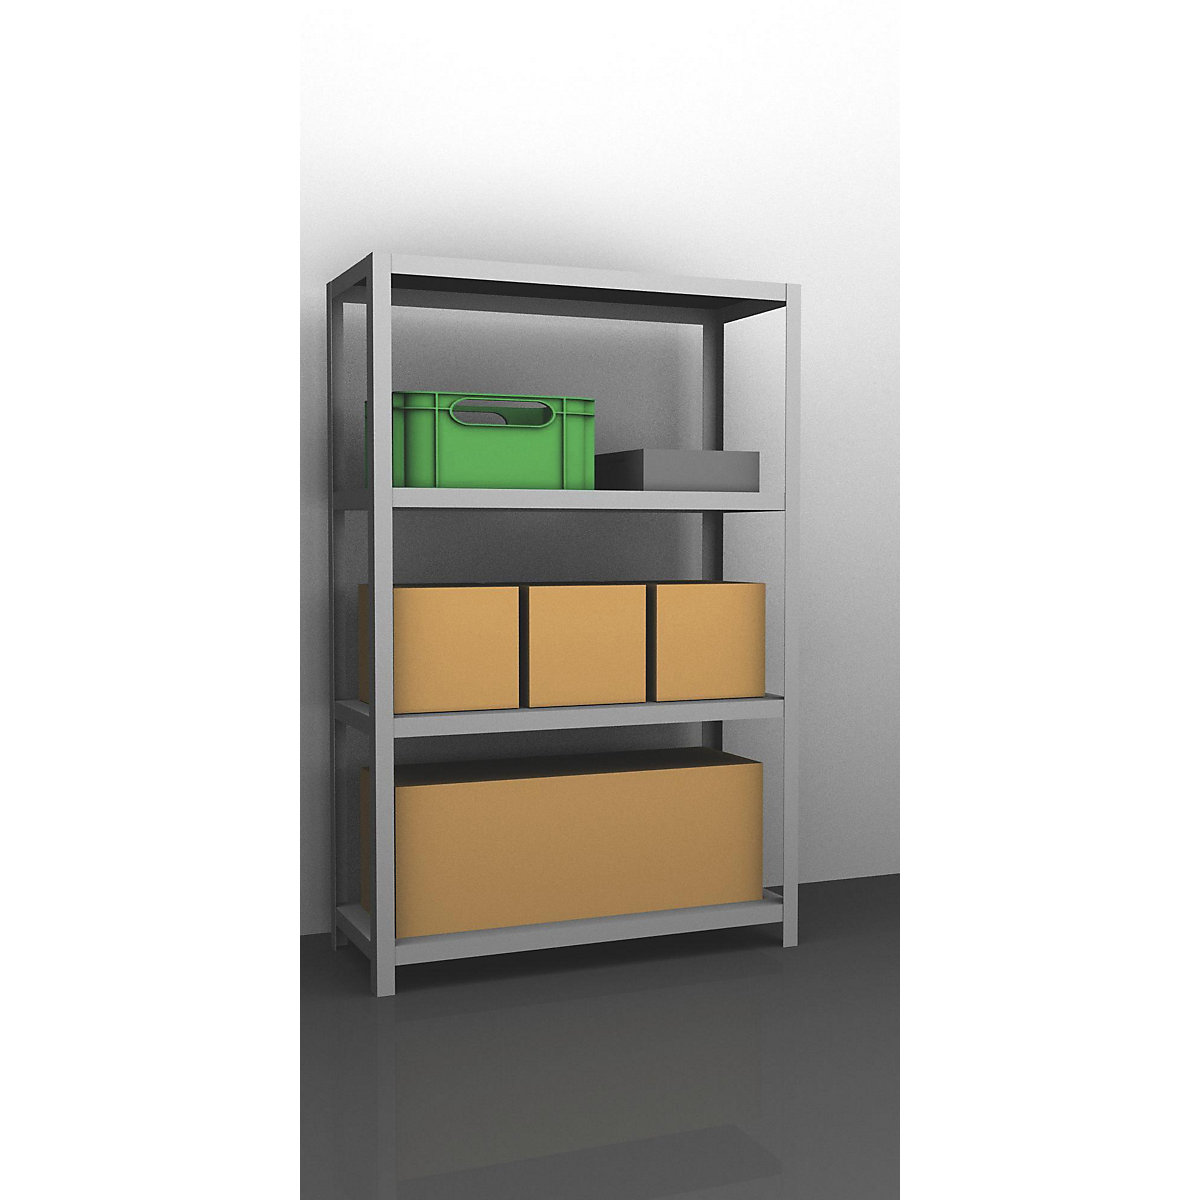 Bolt-together storage shelving, zinc plated, medium duty – eurokraft pro, shelf unit height 1500 mm, shelf width 1000 mm, depth 500 mm, standard shelf unit-8